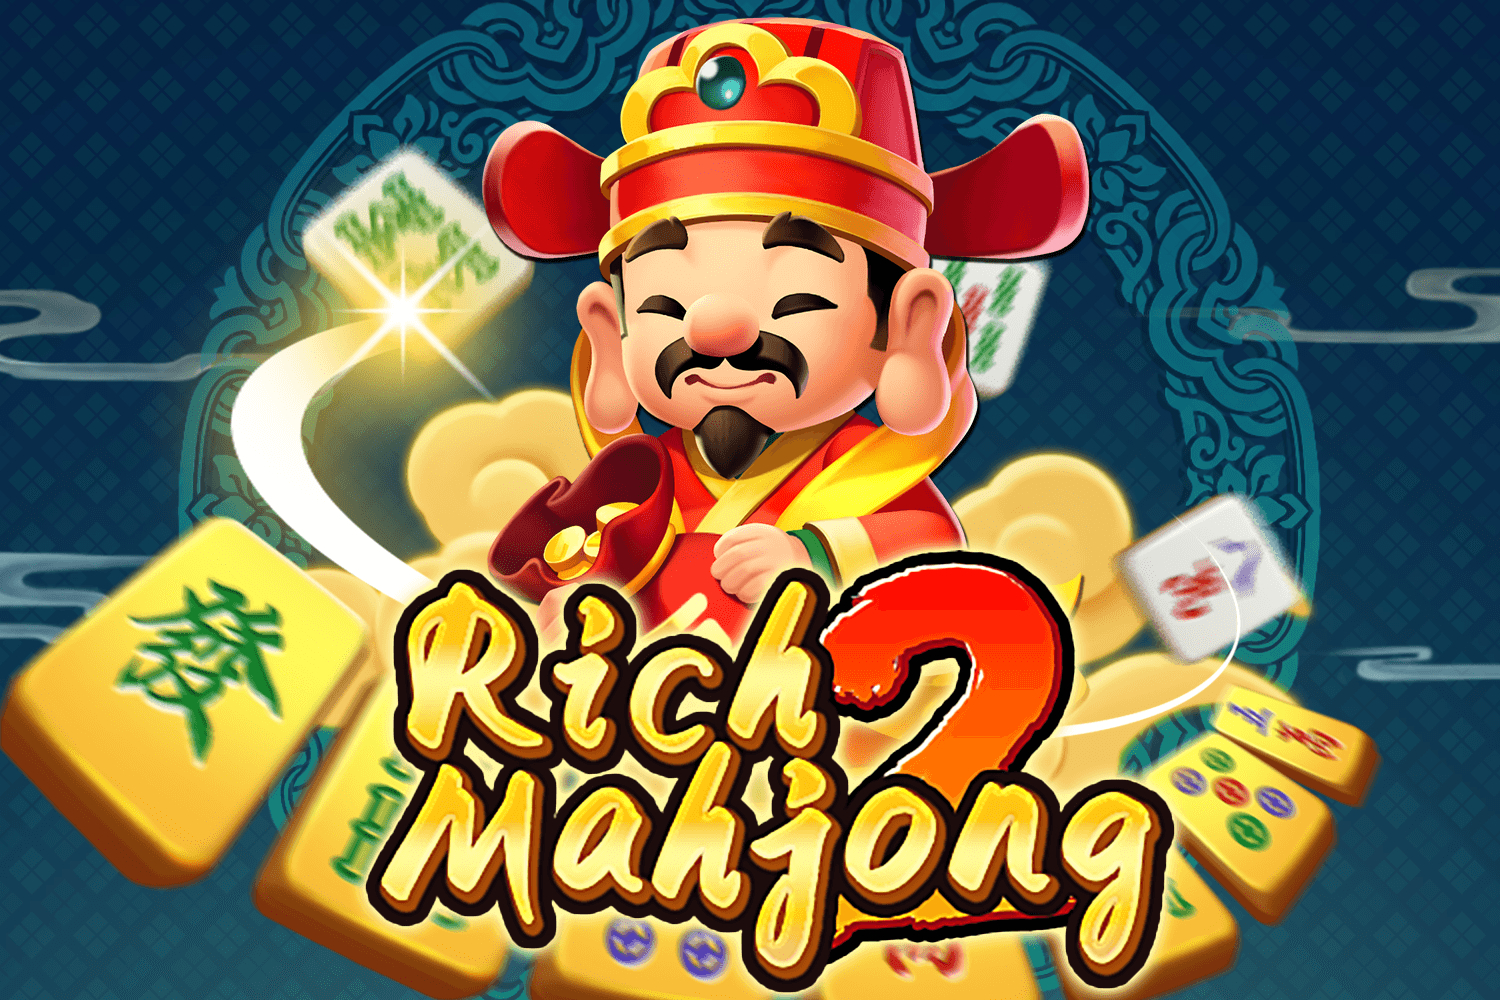 Rich Mahjong 2